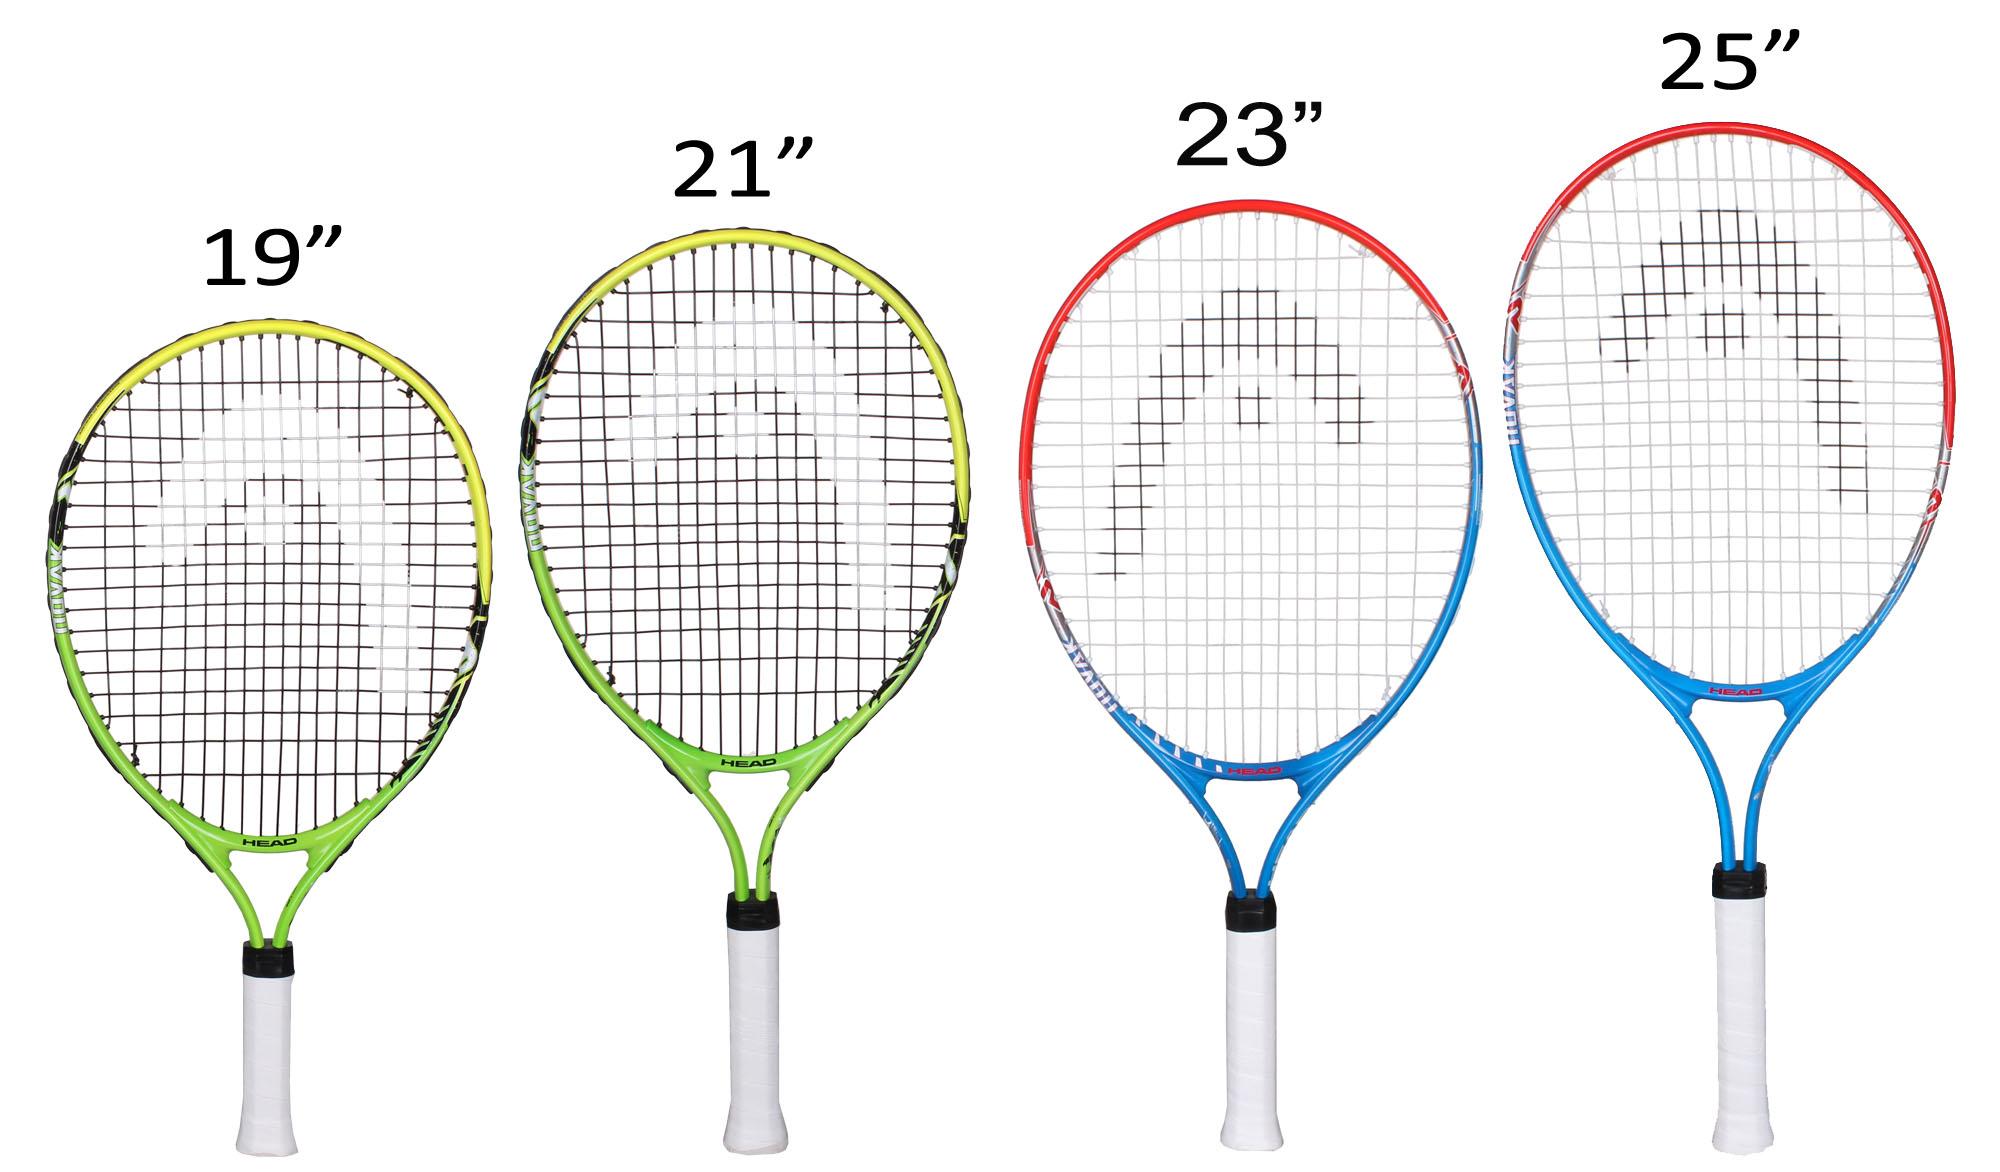 Вес ракетки для тенниса. Размеры теннисной ракетки для большого тенниса 23. Ракетка для большого тенниса Размеры 26. Размер ручки ракетки для большого тенниса 3 7/8. Ракетка для большого тенниса head таблица размеров.